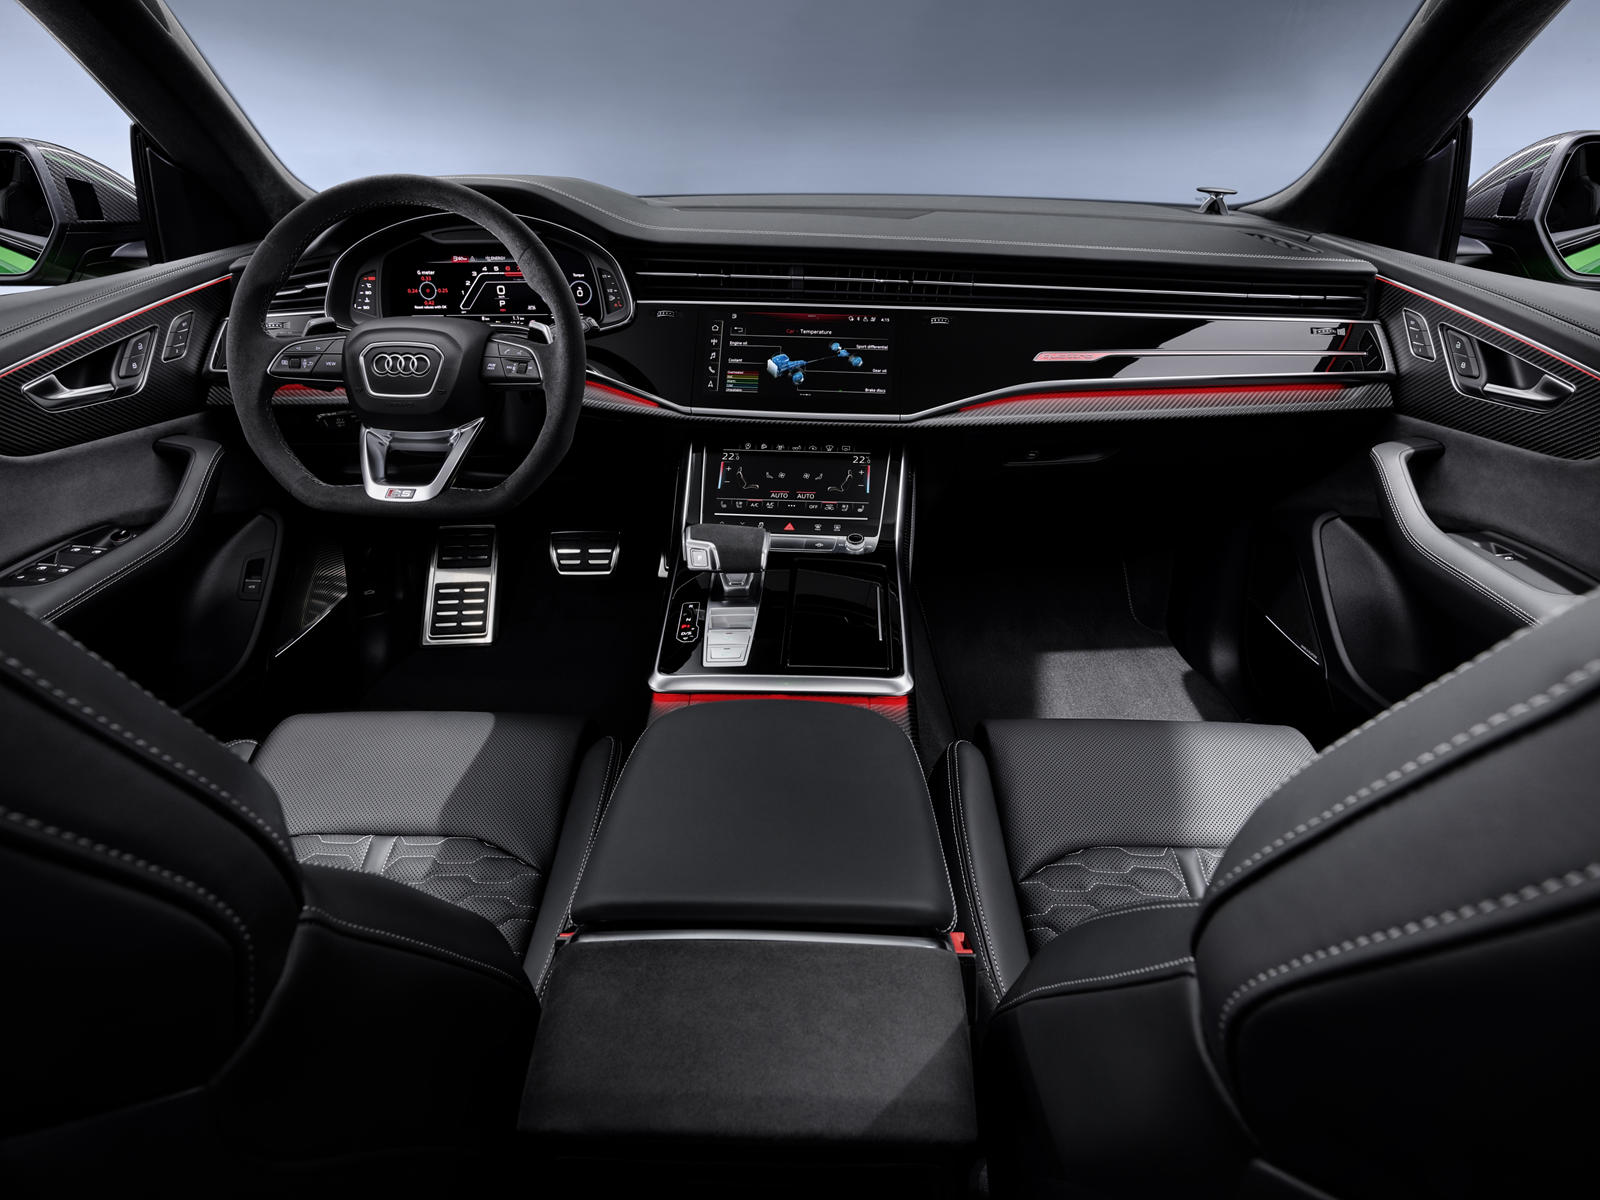 2020 Audi RS Q8 Review Trims Specs Price New Interior Features Exterior Design and 